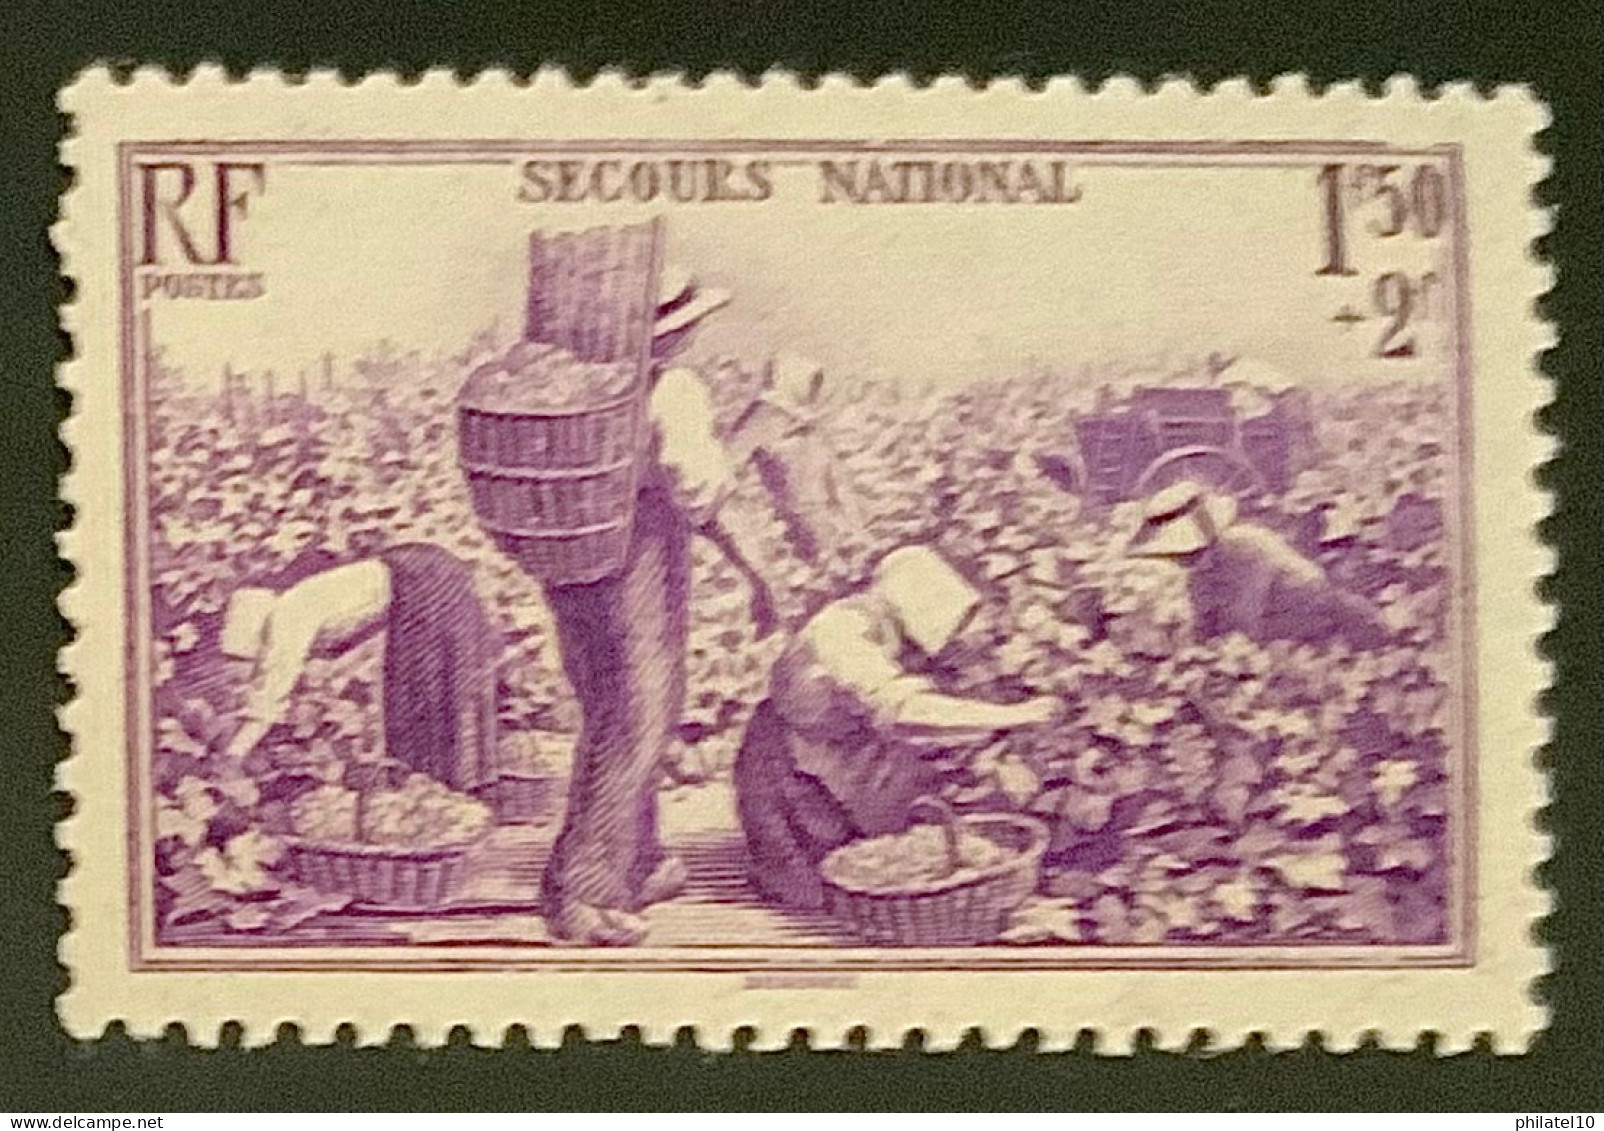 1940 FRANCE N 468 SECOURS NATIONAL - NEUF** - Ungebraucht